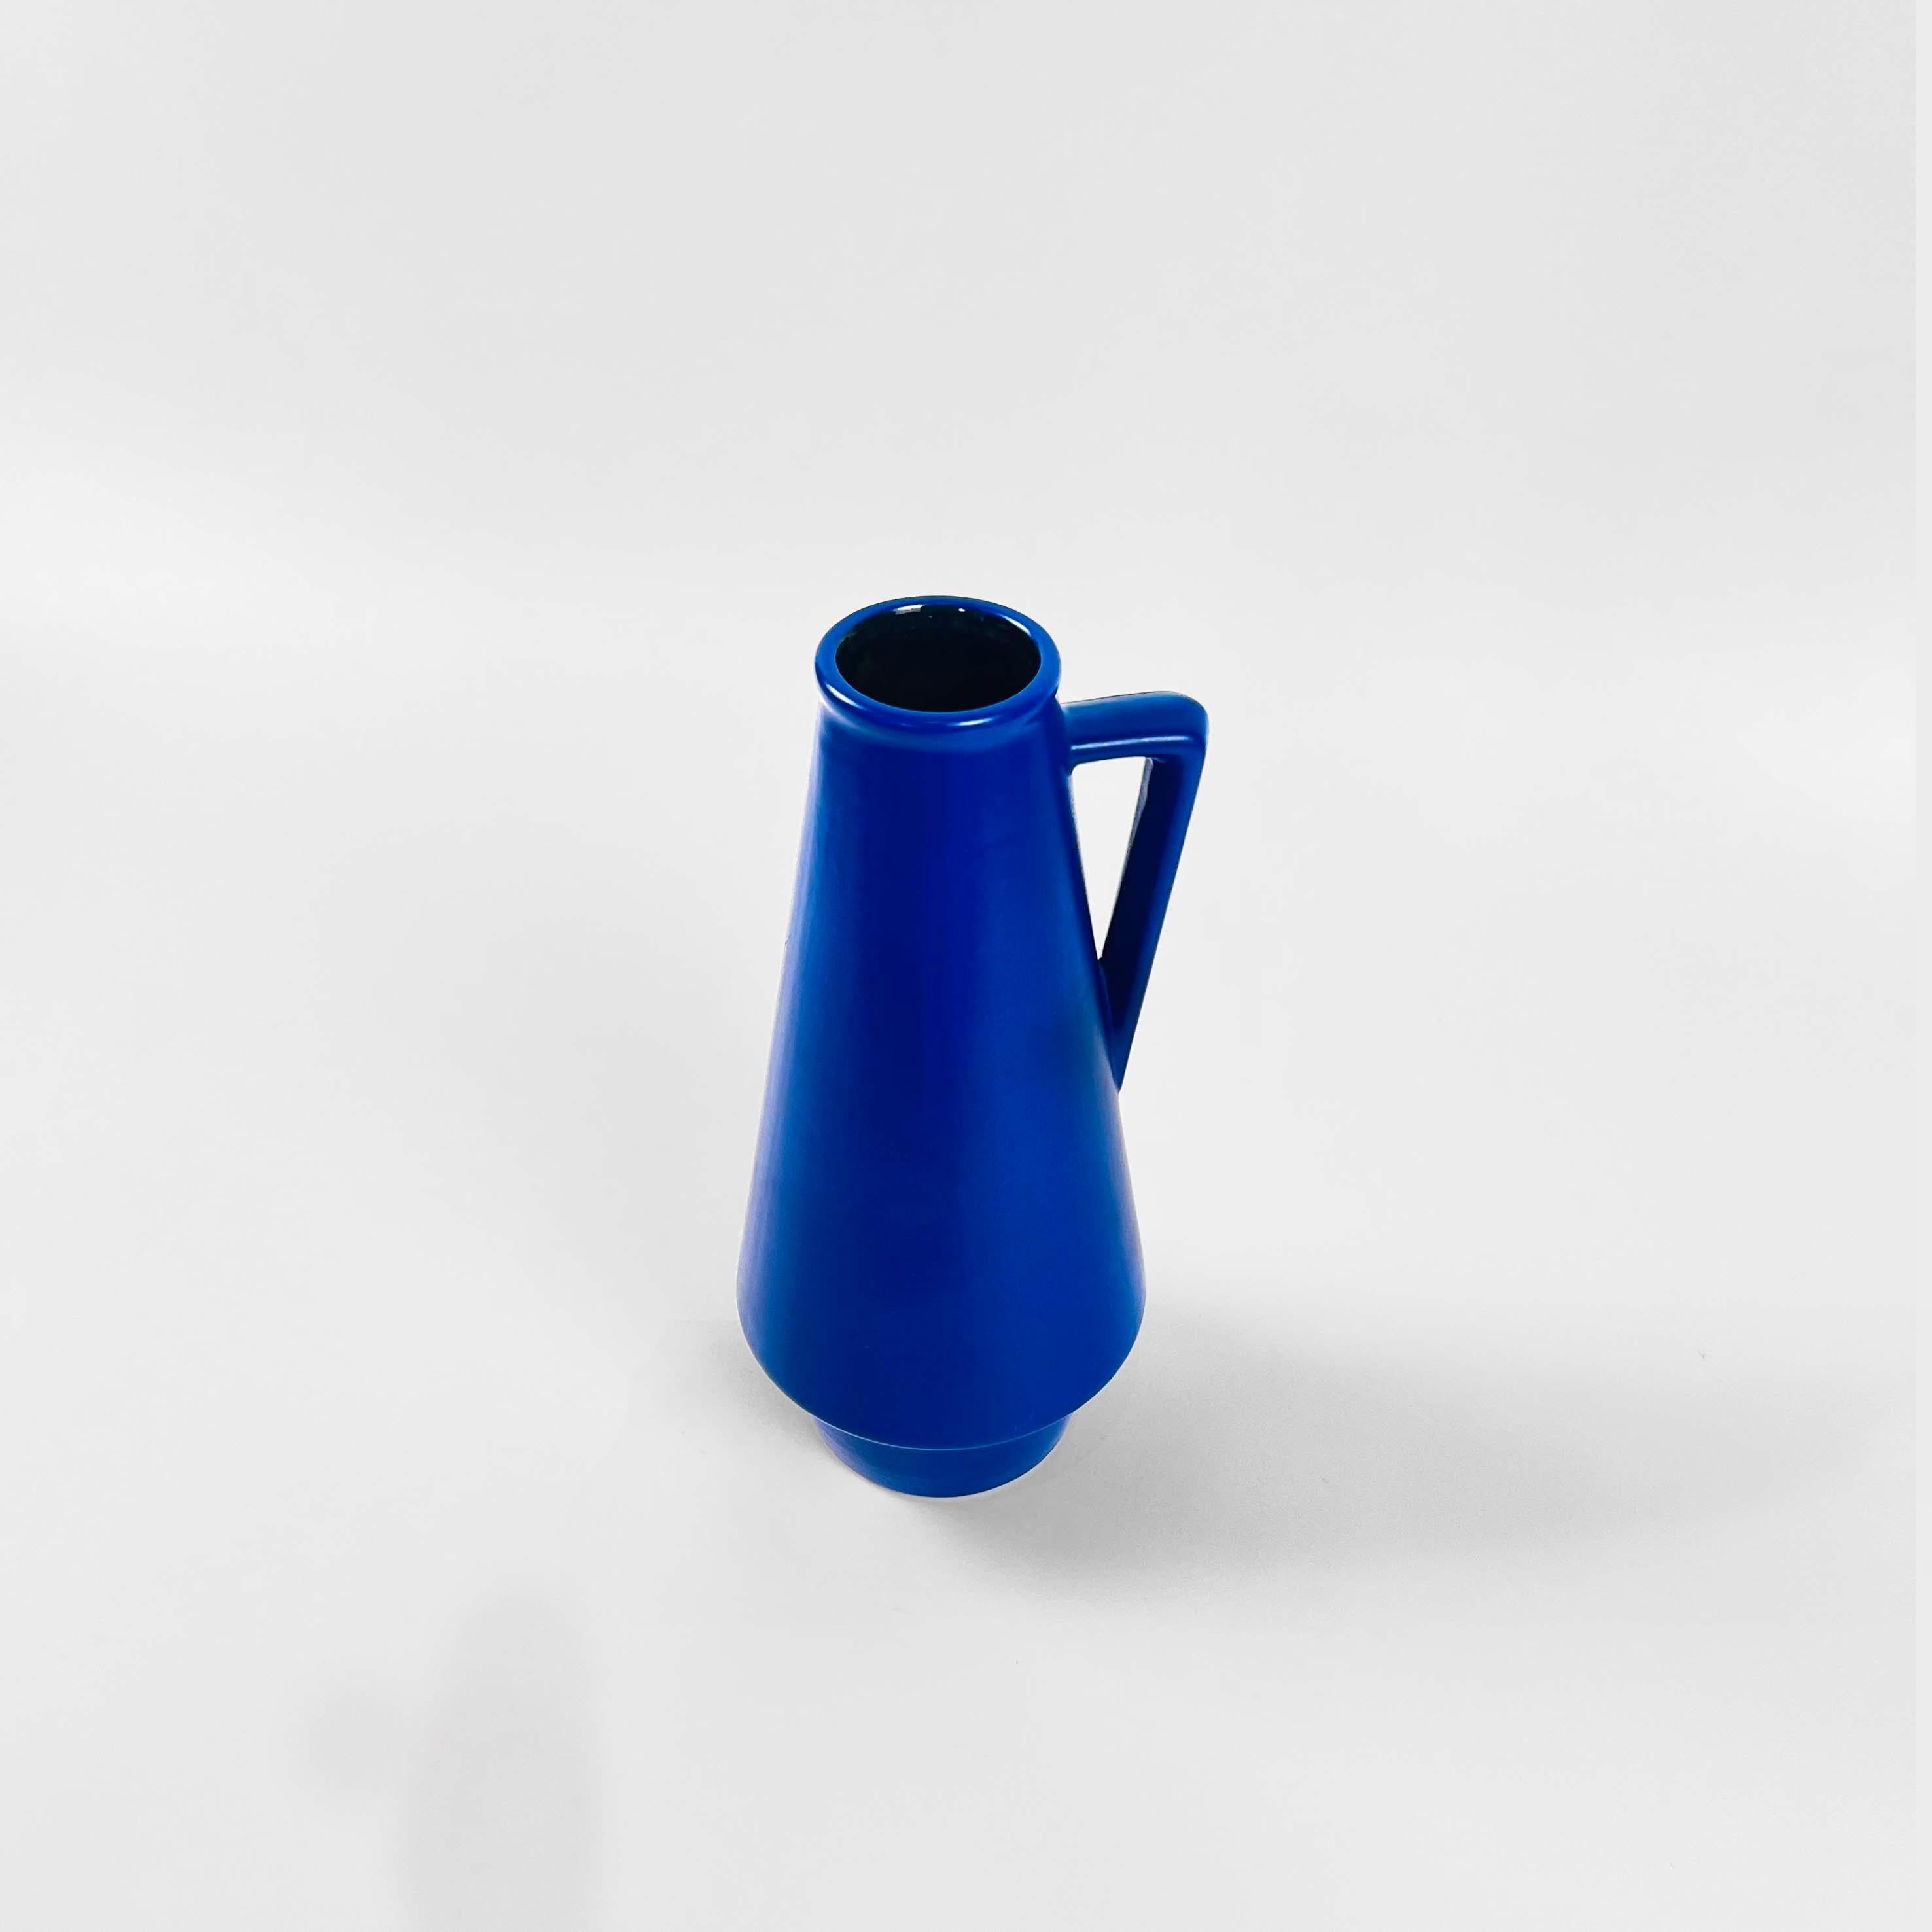 Glazed Pottery Vase in Klein Blue, Germany, 1960s For Sale